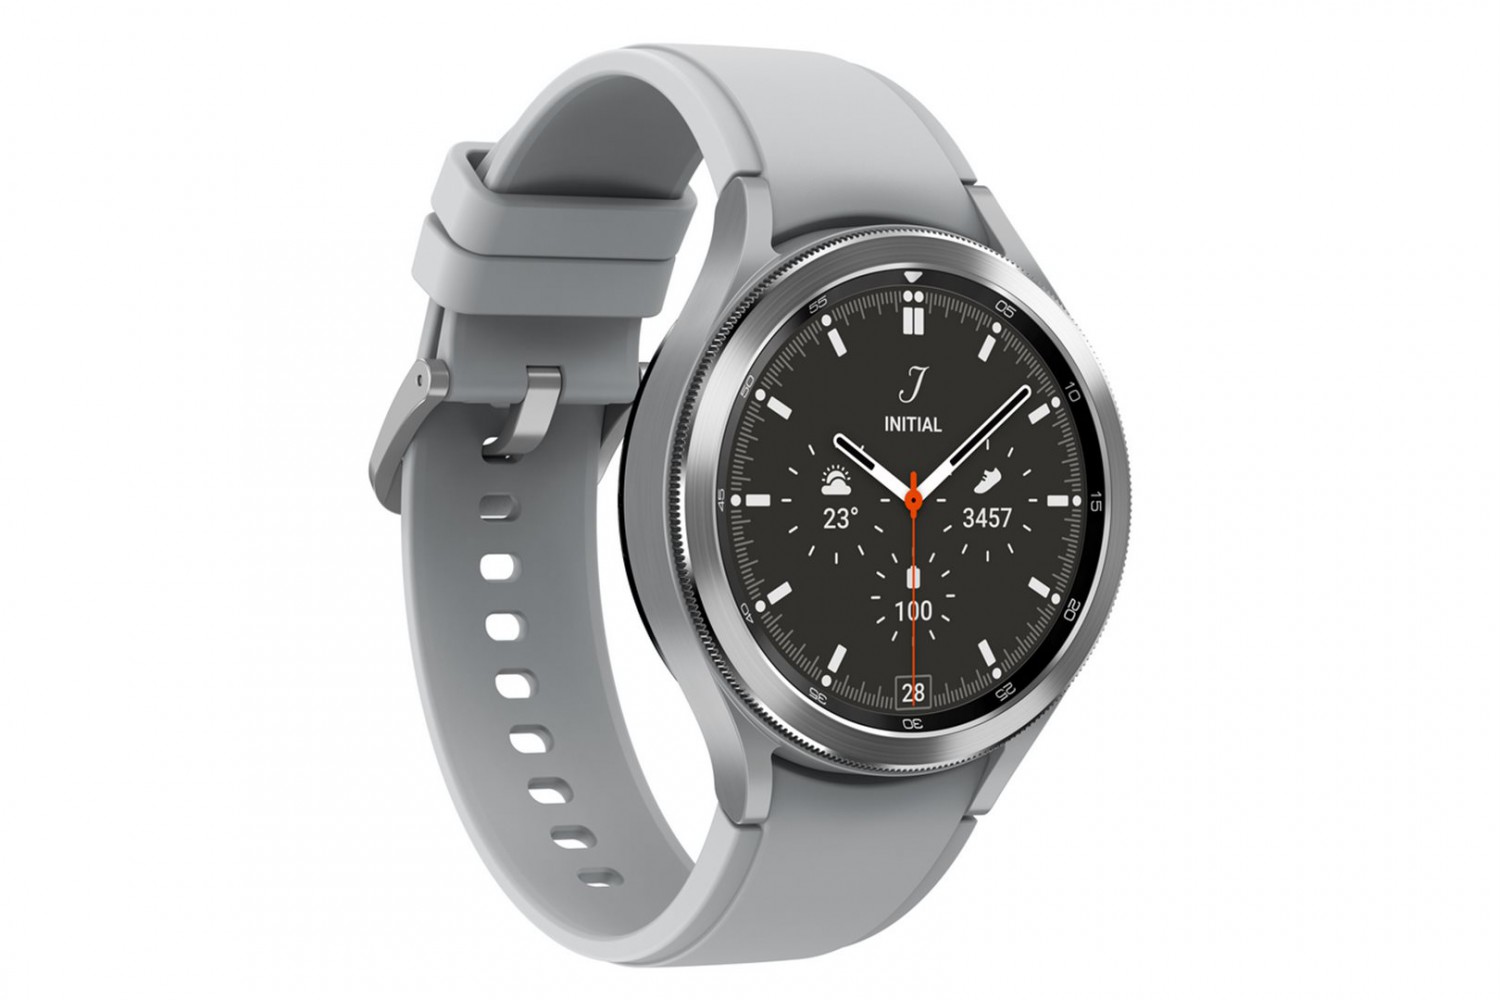 Samsung Galaxy Watch4 Classic LTE 46mm stříbrná